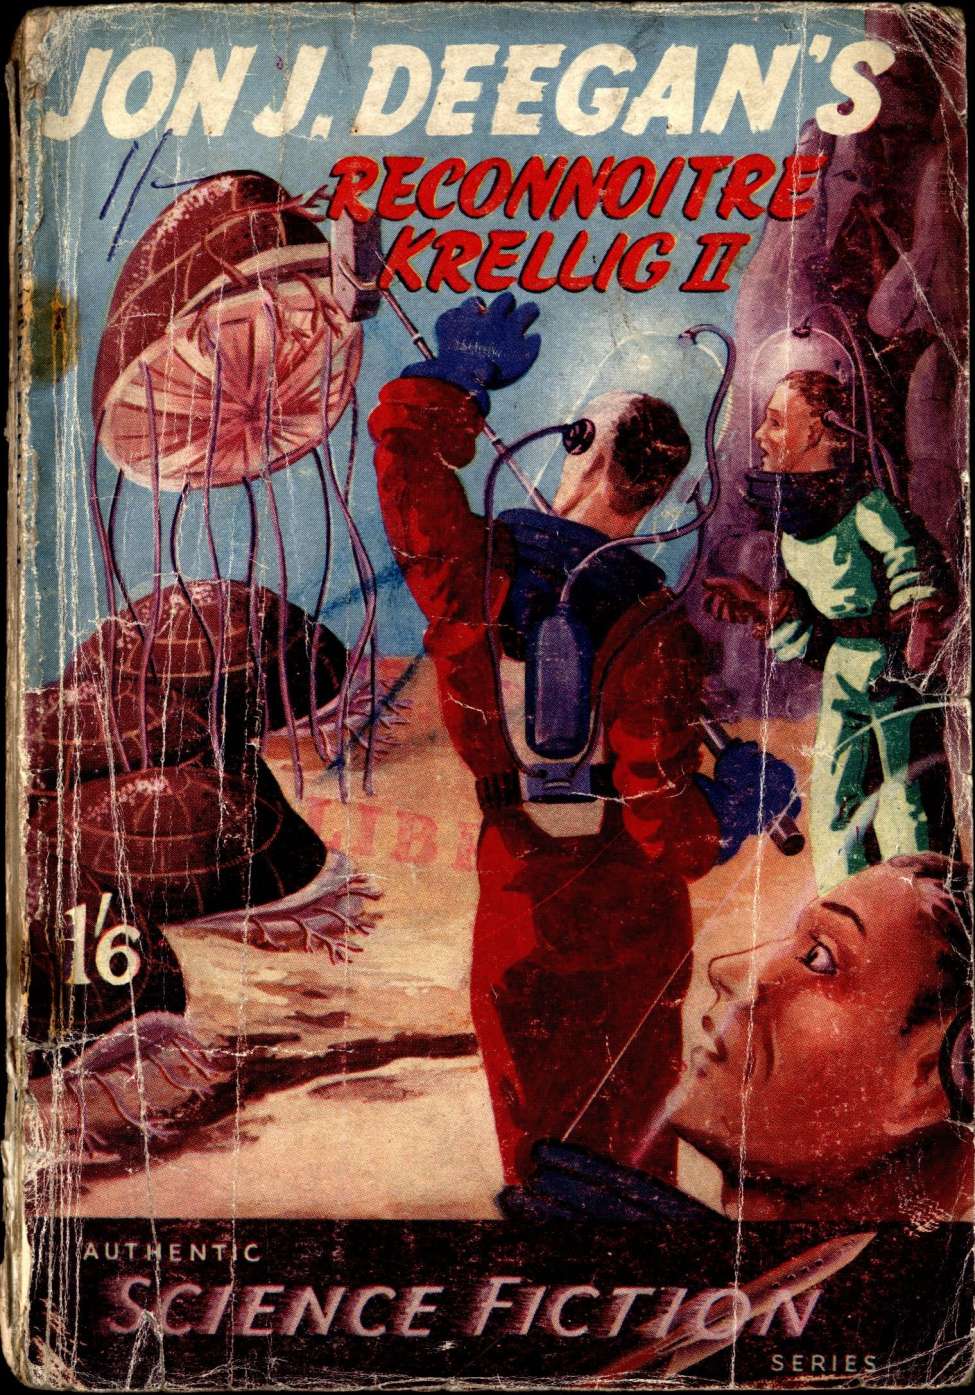 Comic Book Cover For Authentic Science Fiction 2 - Reconnoitre Krellig II - Jon J. Deegan